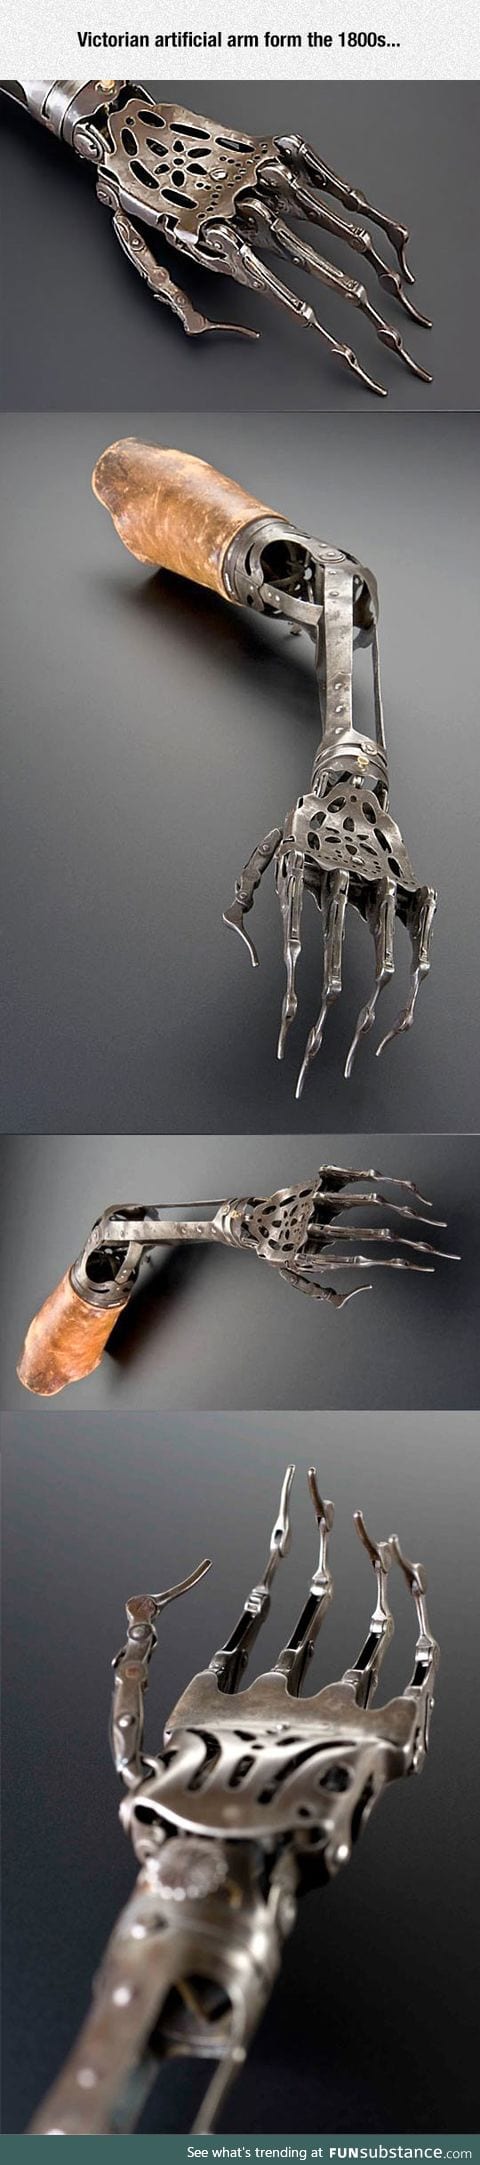 Artificial Victorian arm